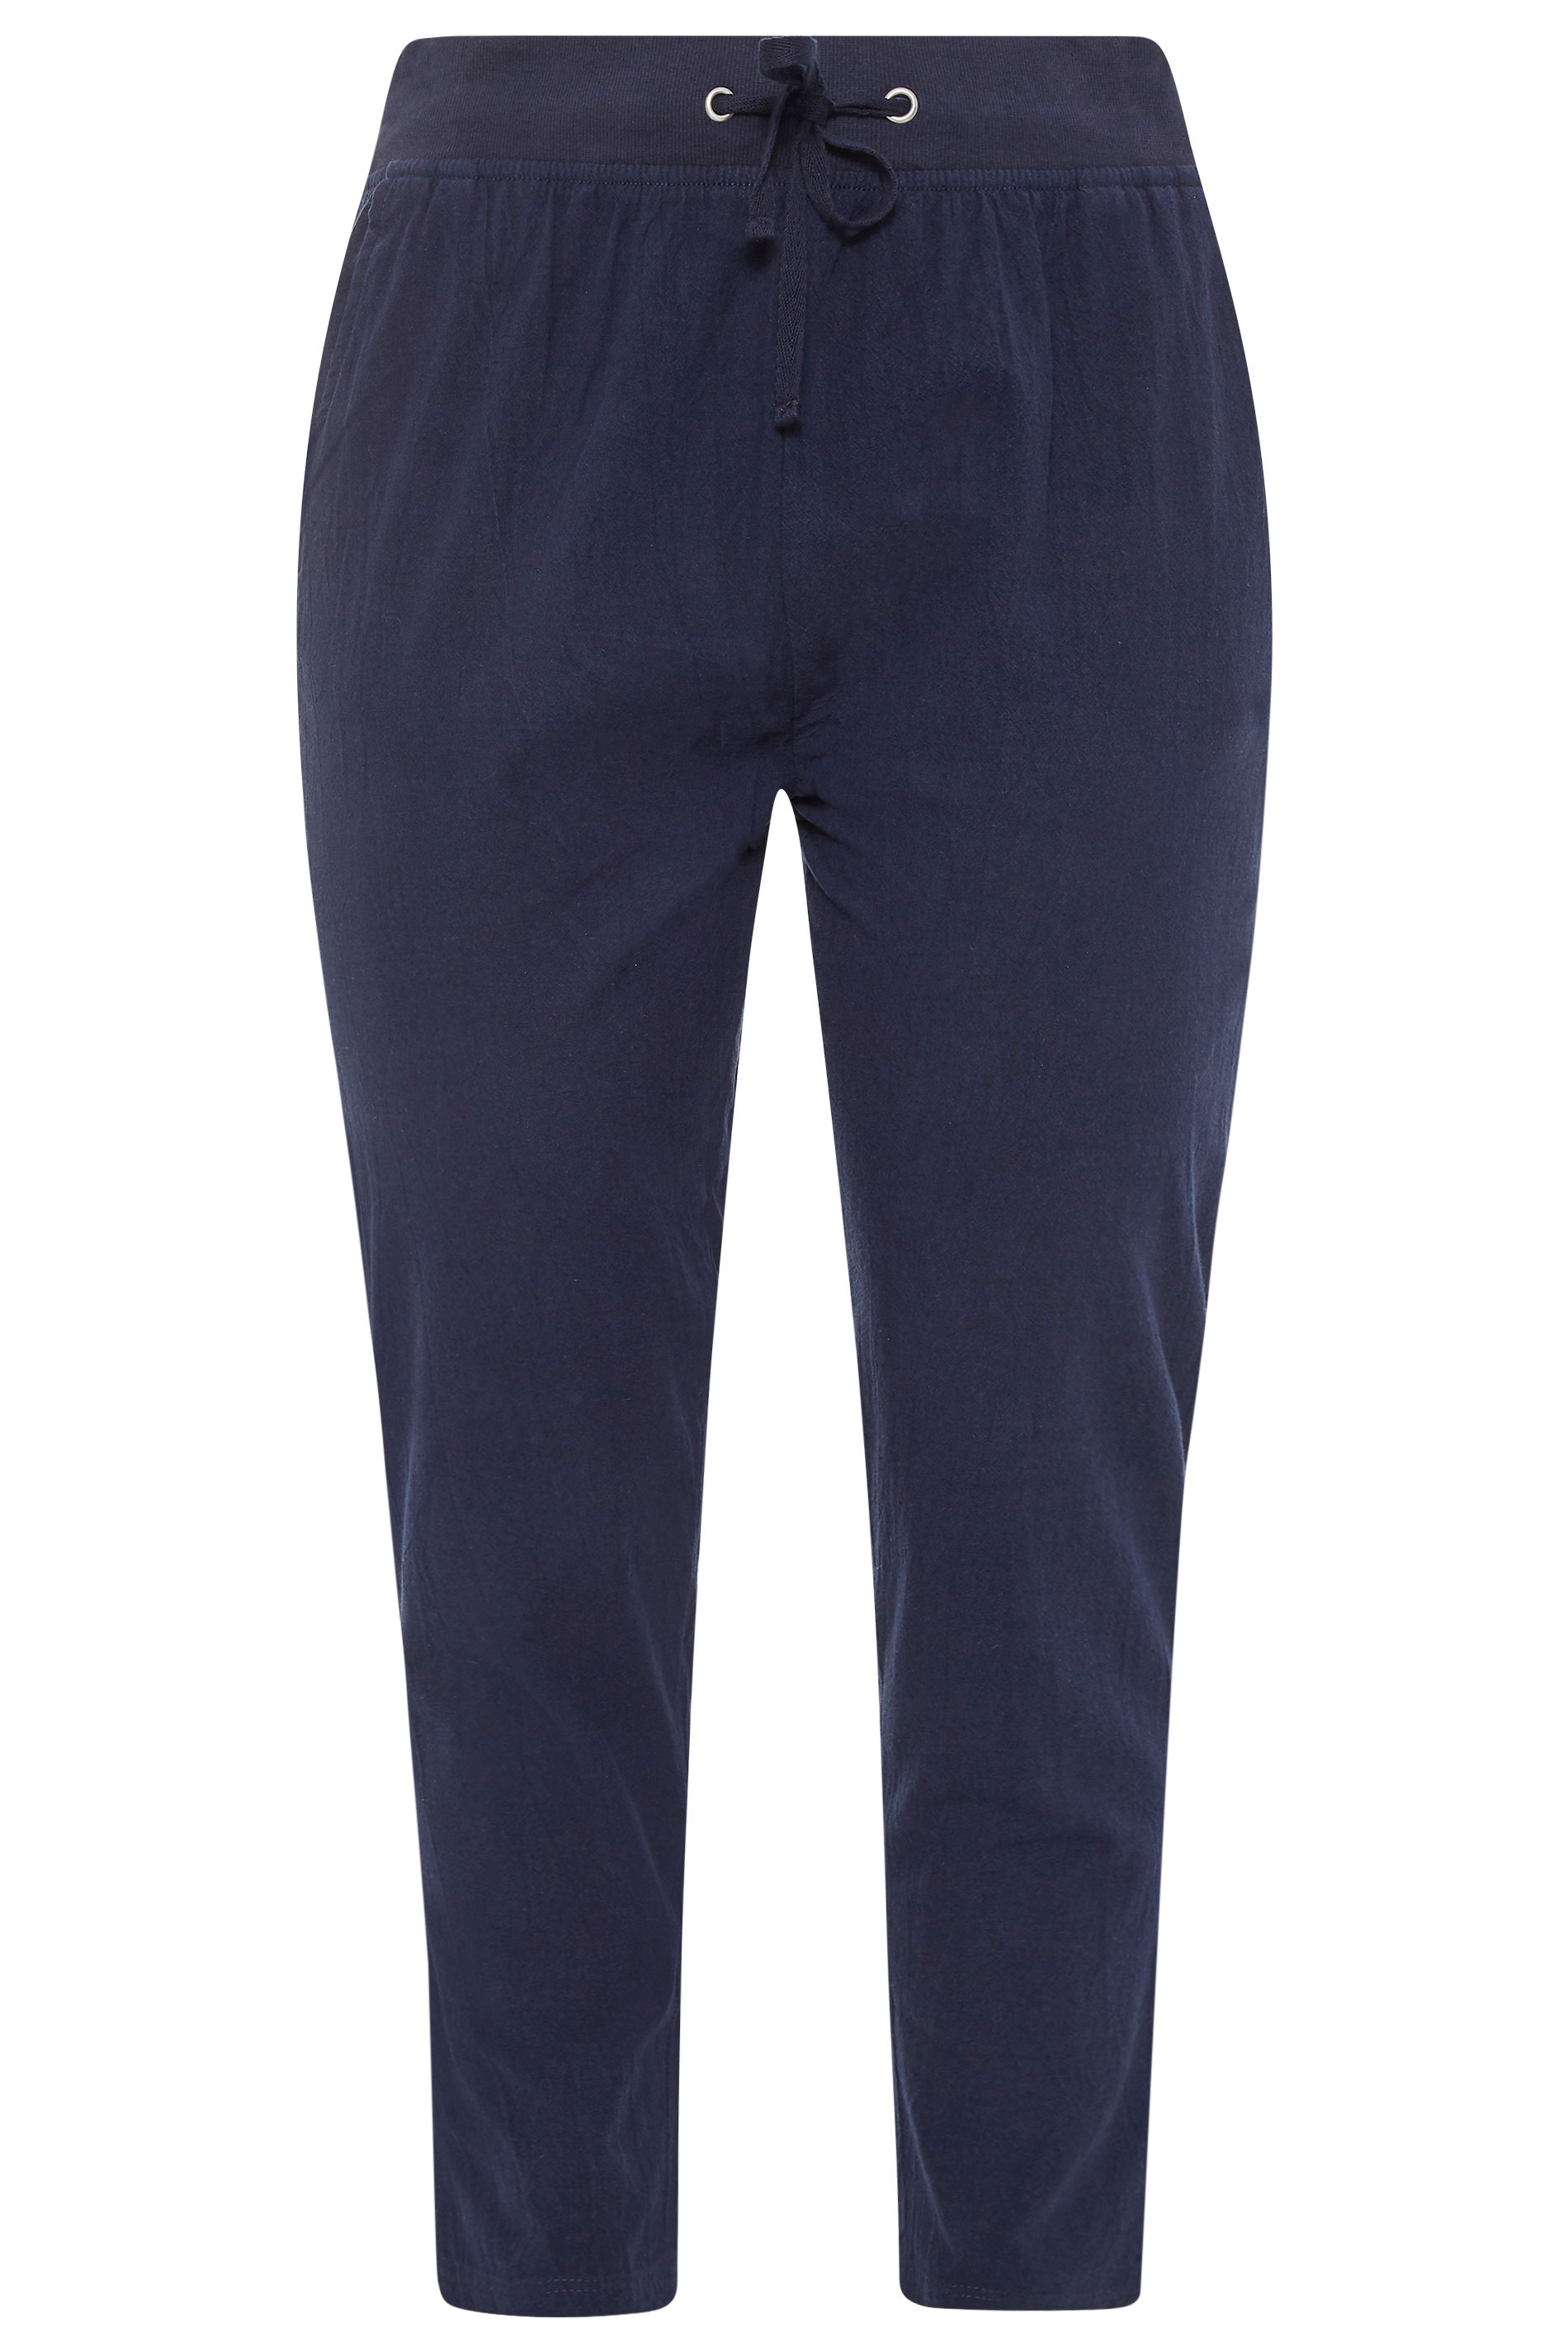 Grande taille  Pantalons Grande taille  Joggings | Jogging Bleu Marine en Coton - QX24977